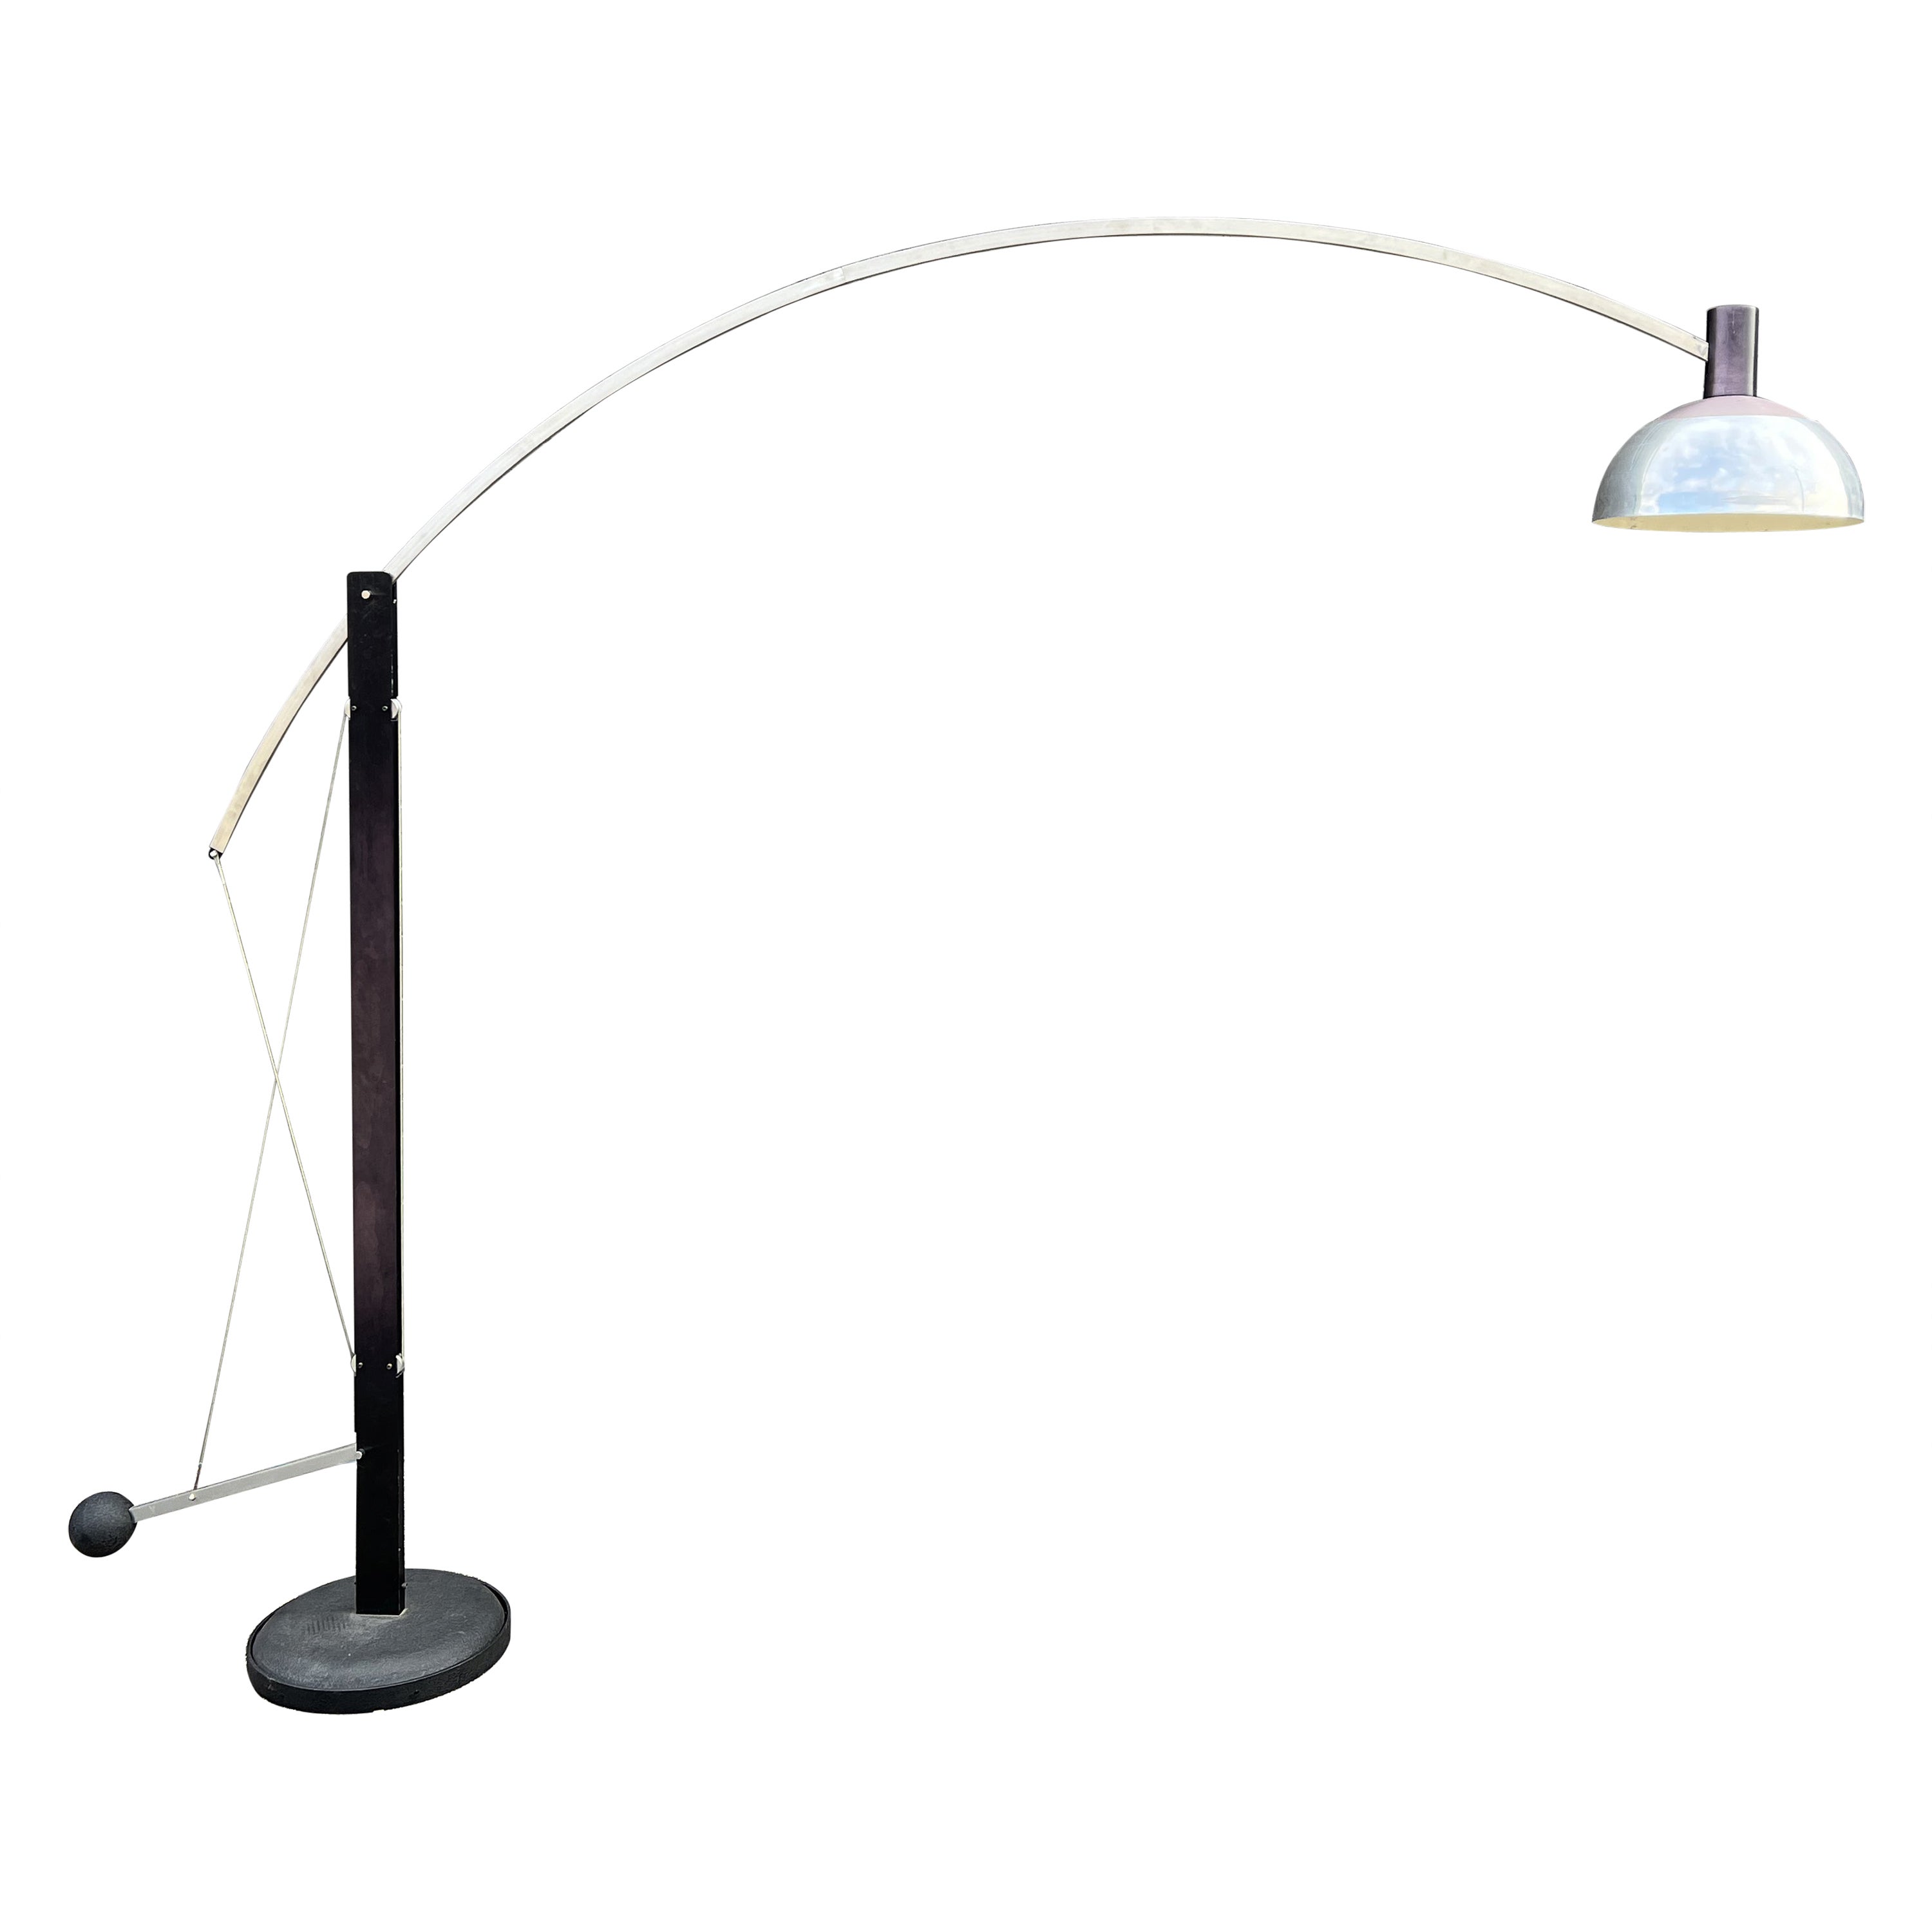 Mid-Century Modern L' Arc Lamp by Robert Sonneman Adjustable Height Rotational